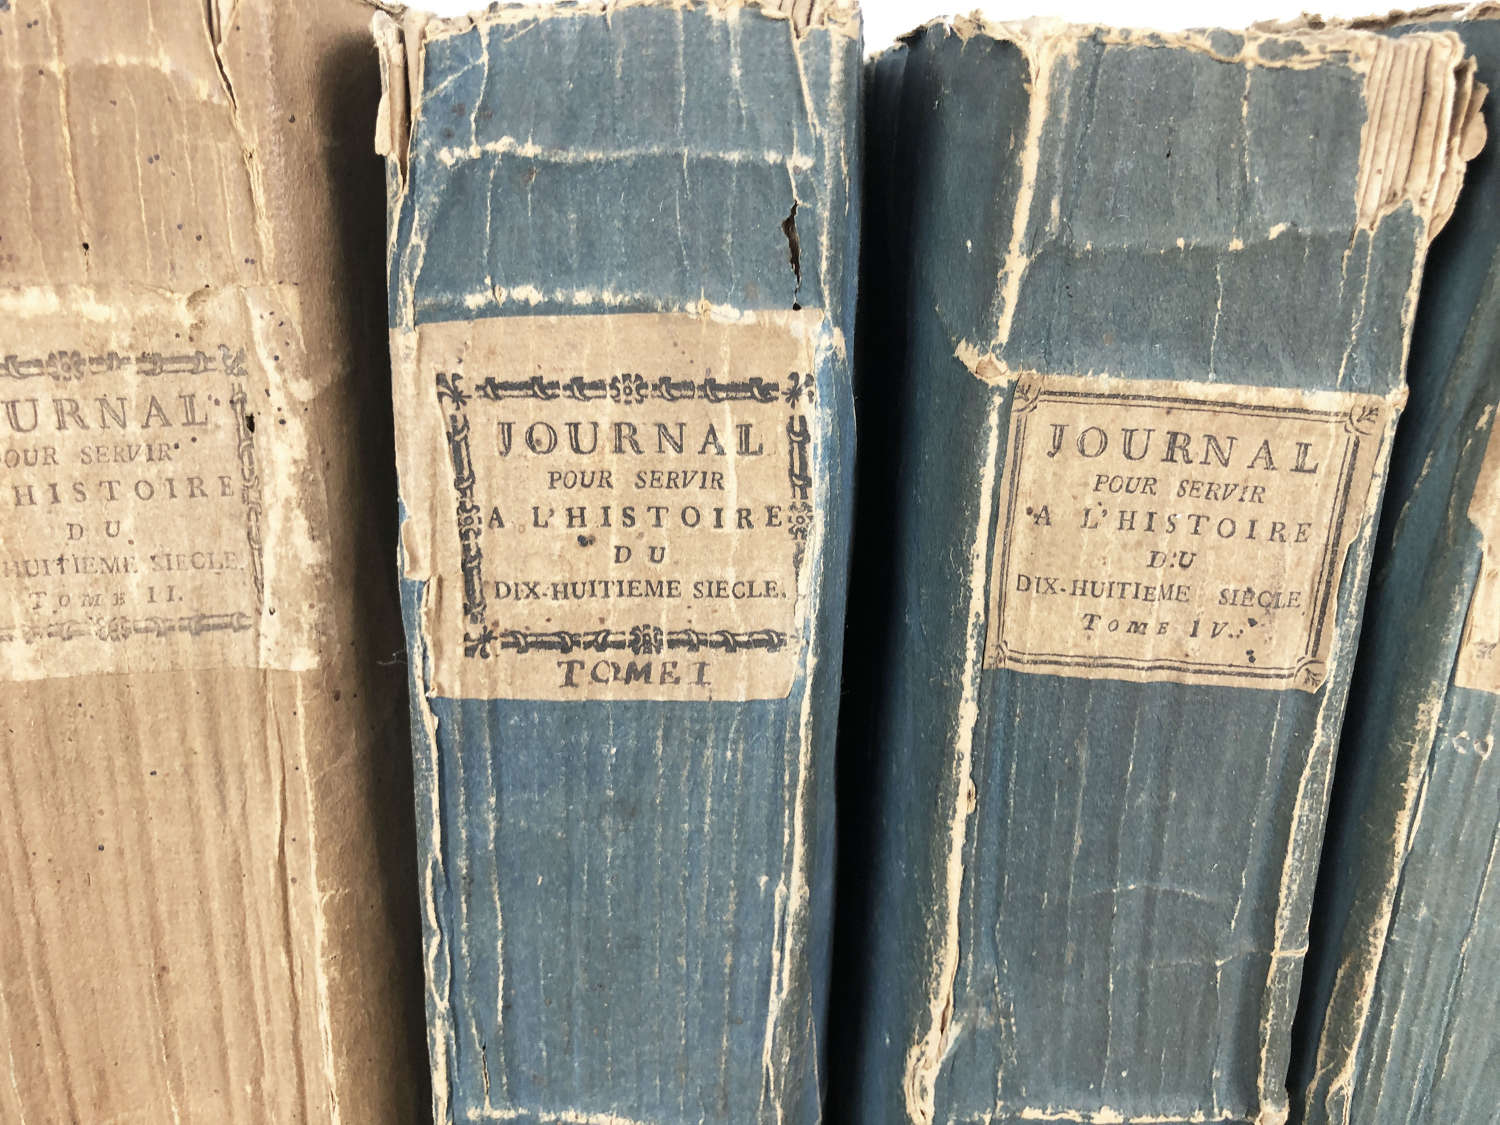 5 Volumes of the 'Journal d'Histoire du XV111 siecle